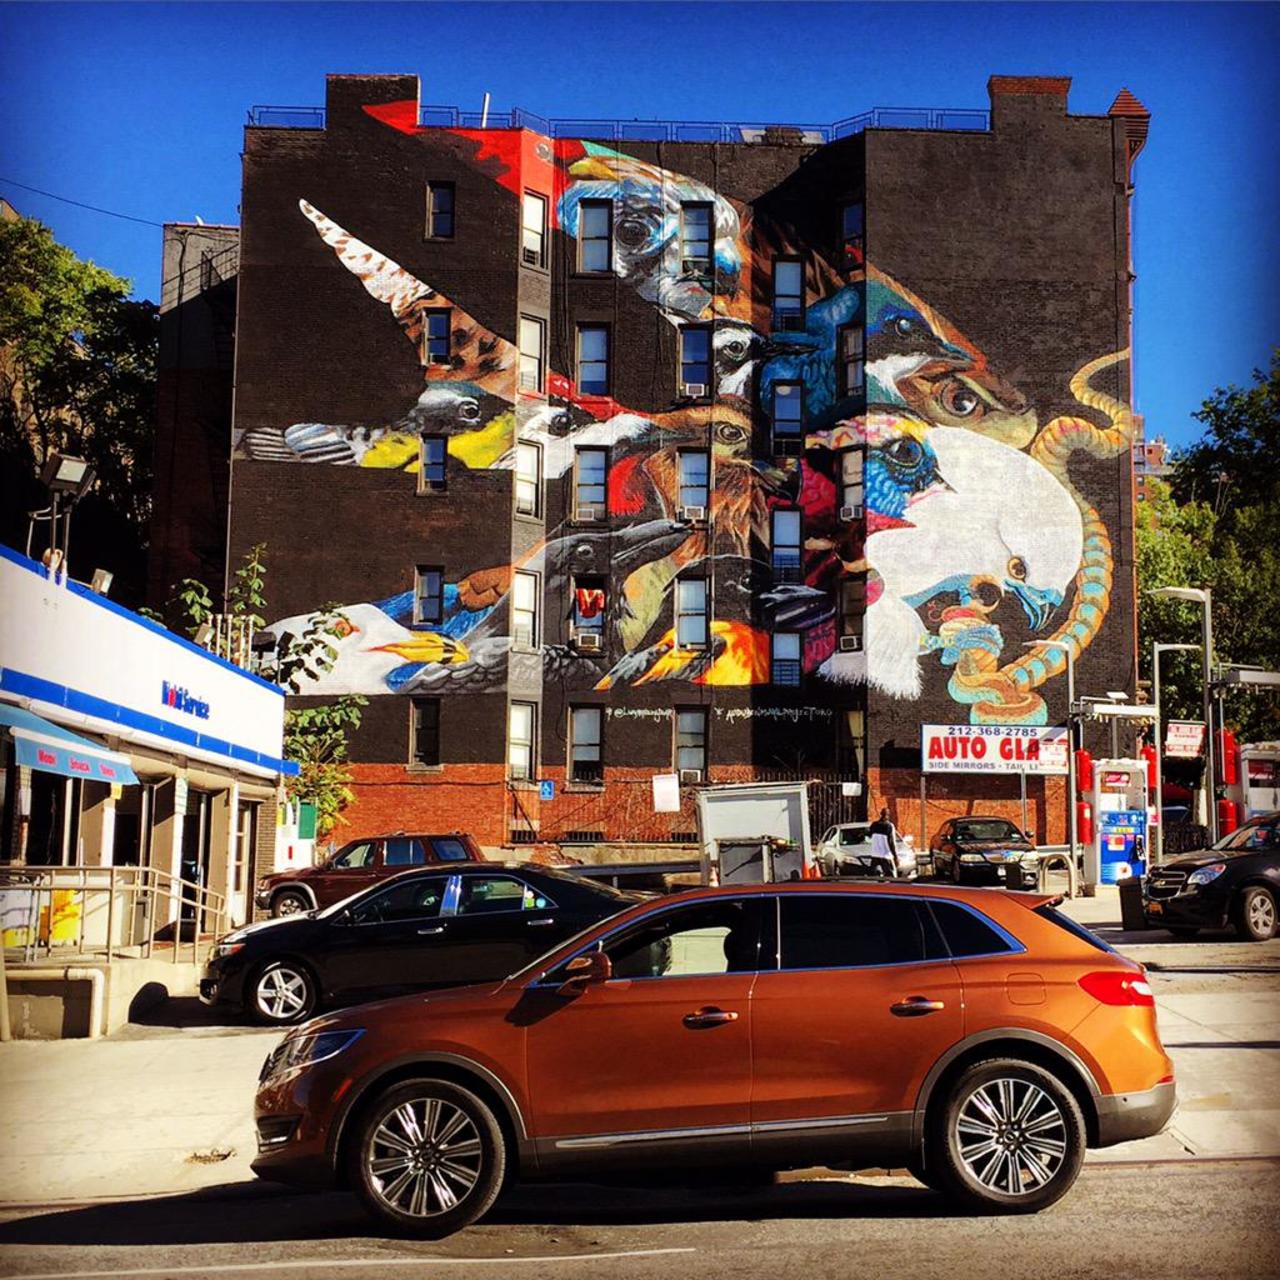 RT @Led_Black: #Bella is a work of art... @LincolnMotorCo #lincolnmkx #Art #StreetArt #Graffiti #Auto http://t.co/7YhrbJIXd6